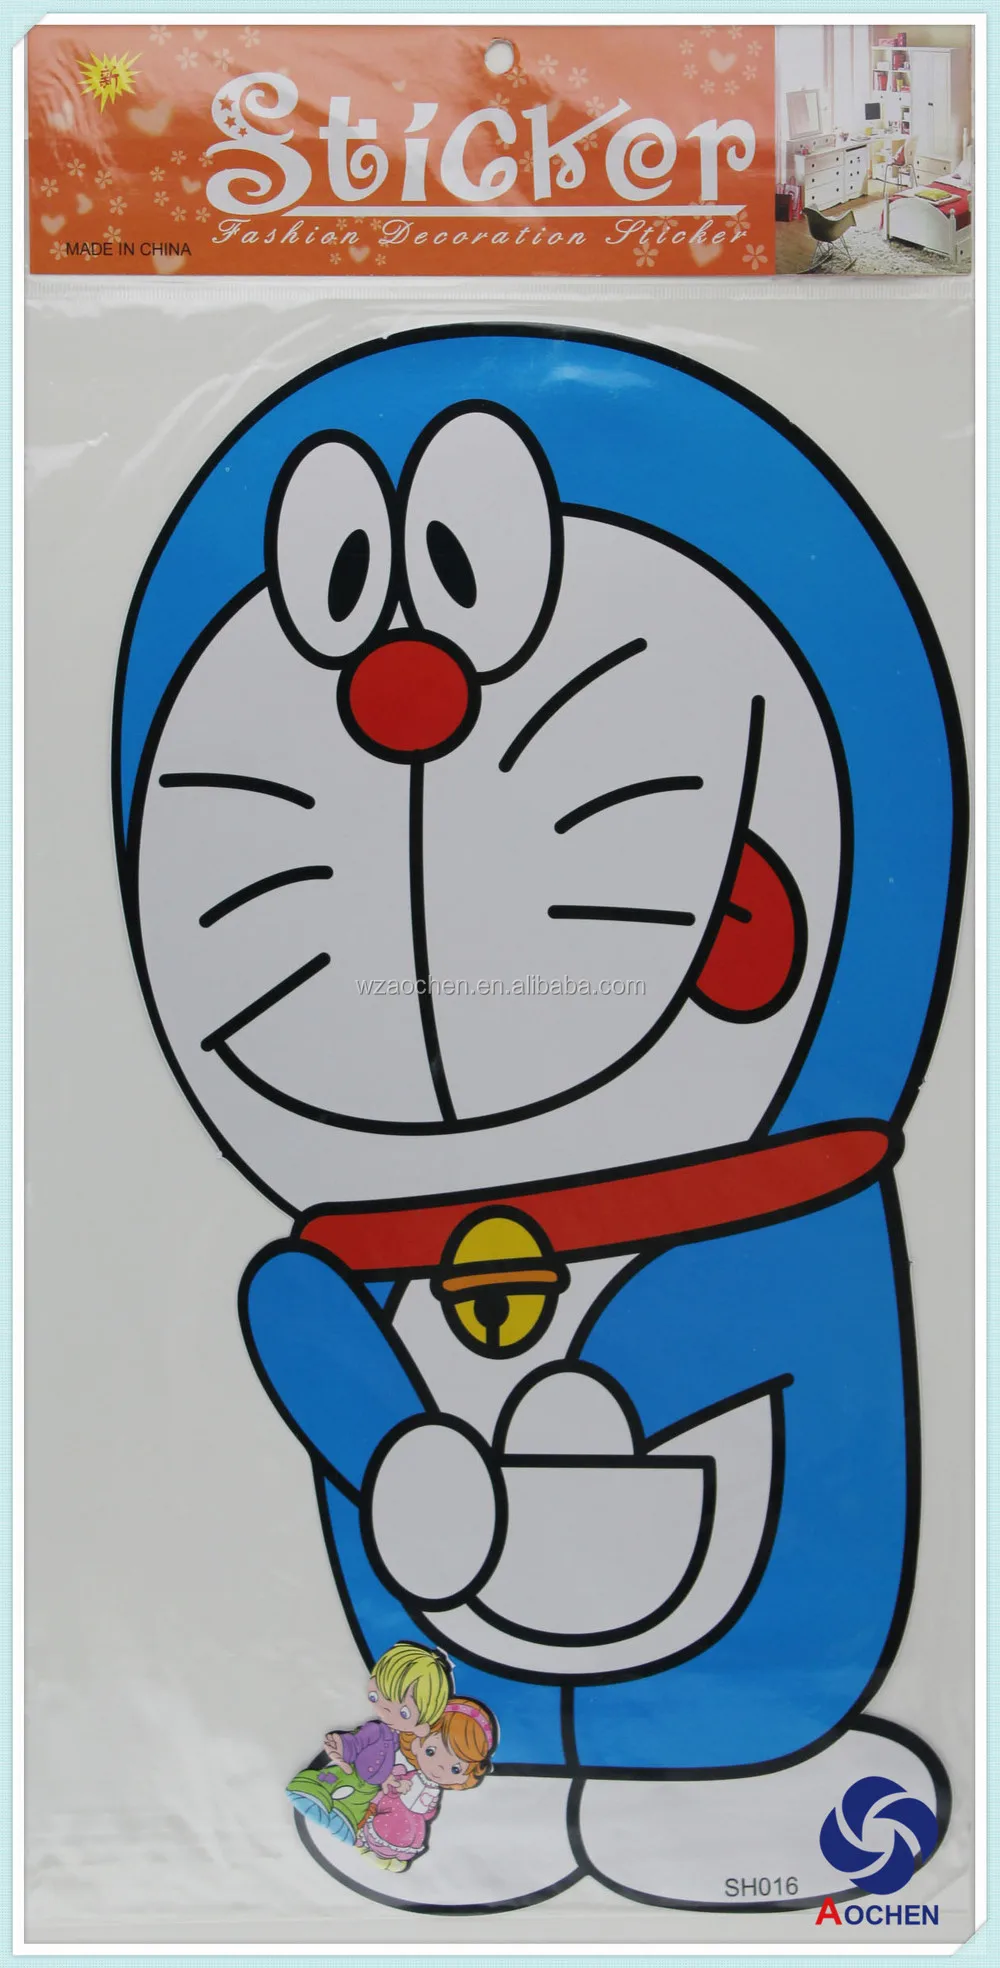 110 Wallpaper Dinding Kamar  Anak Doraemon  Wallpaper Dinding